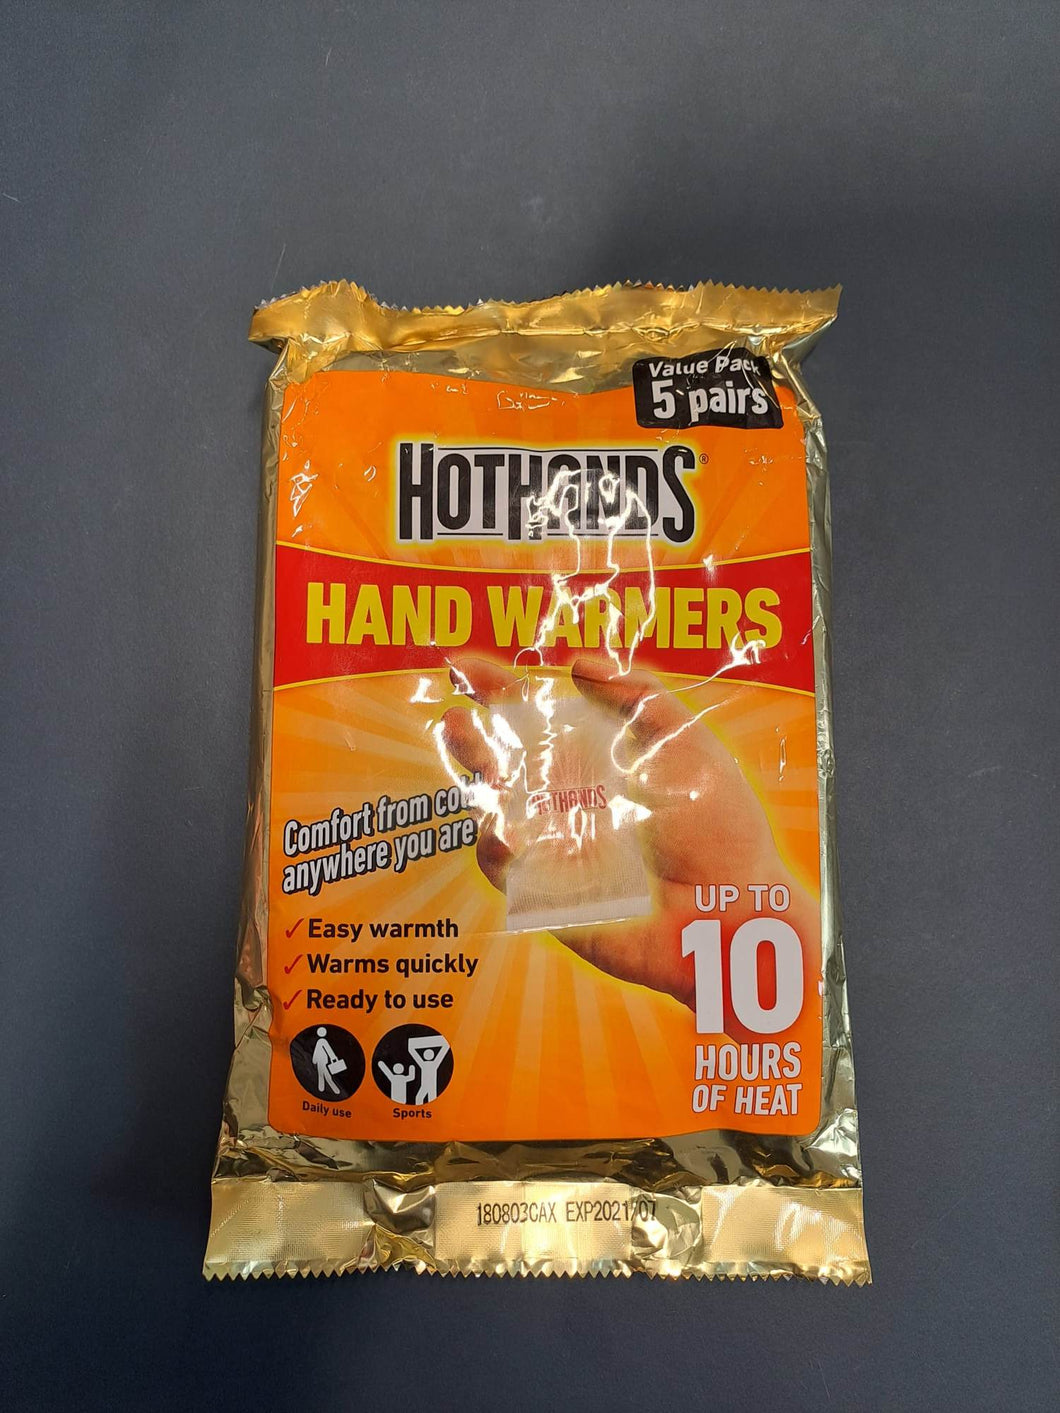 Hand warmers - 5 Pairs